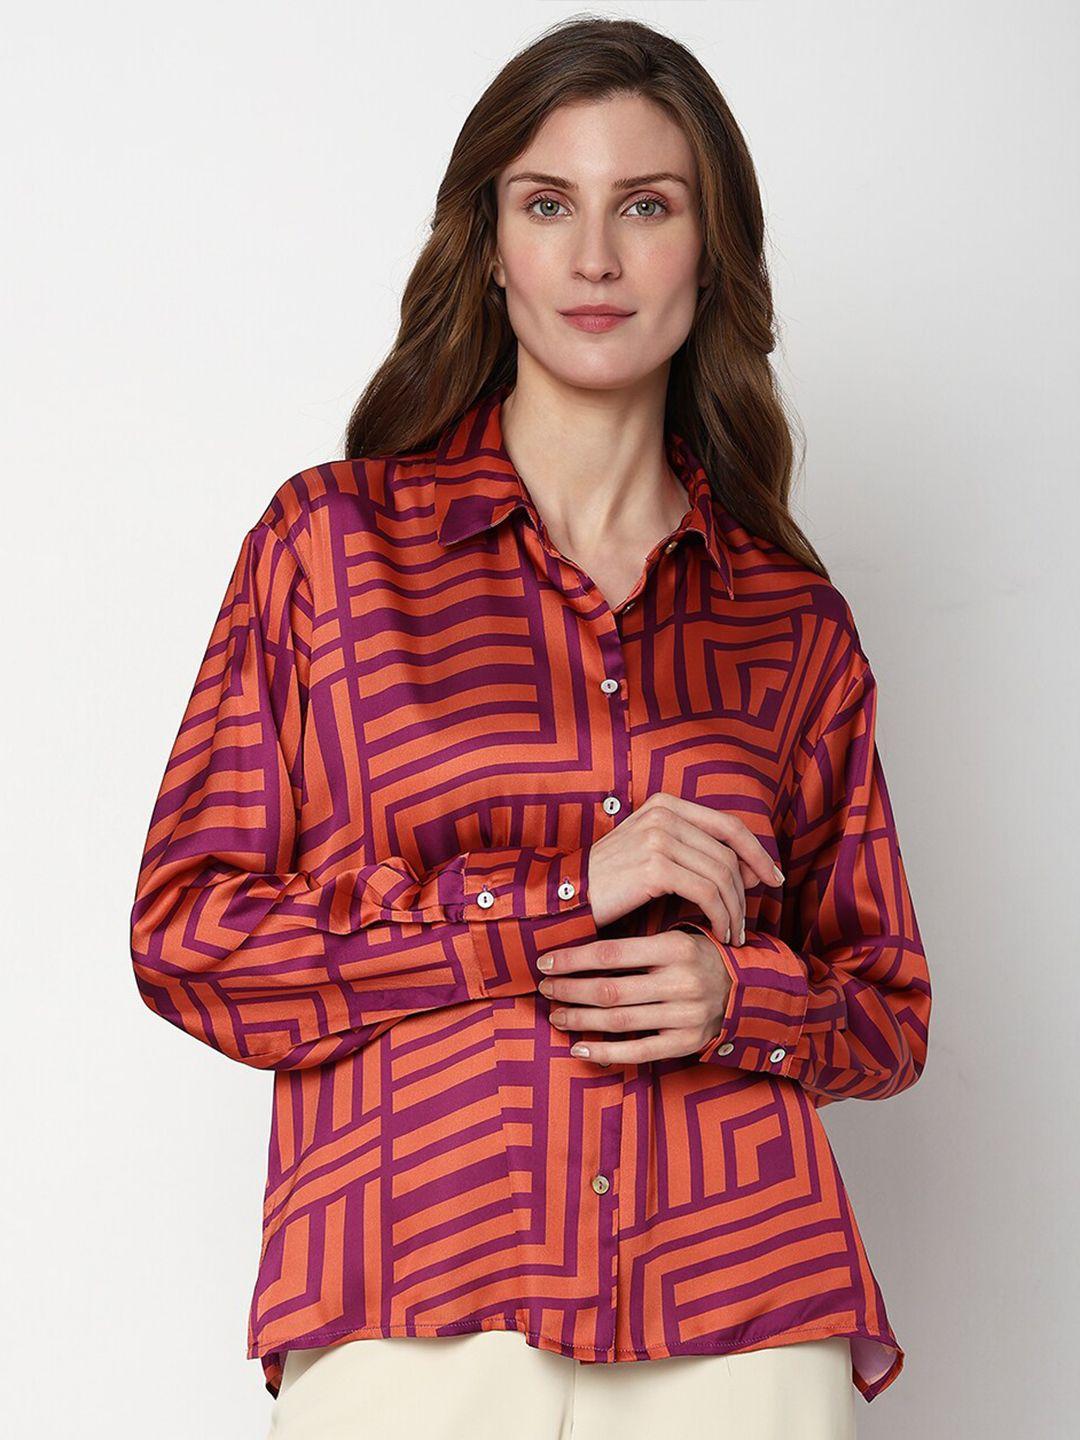 vero moda geometric printed casual shirt